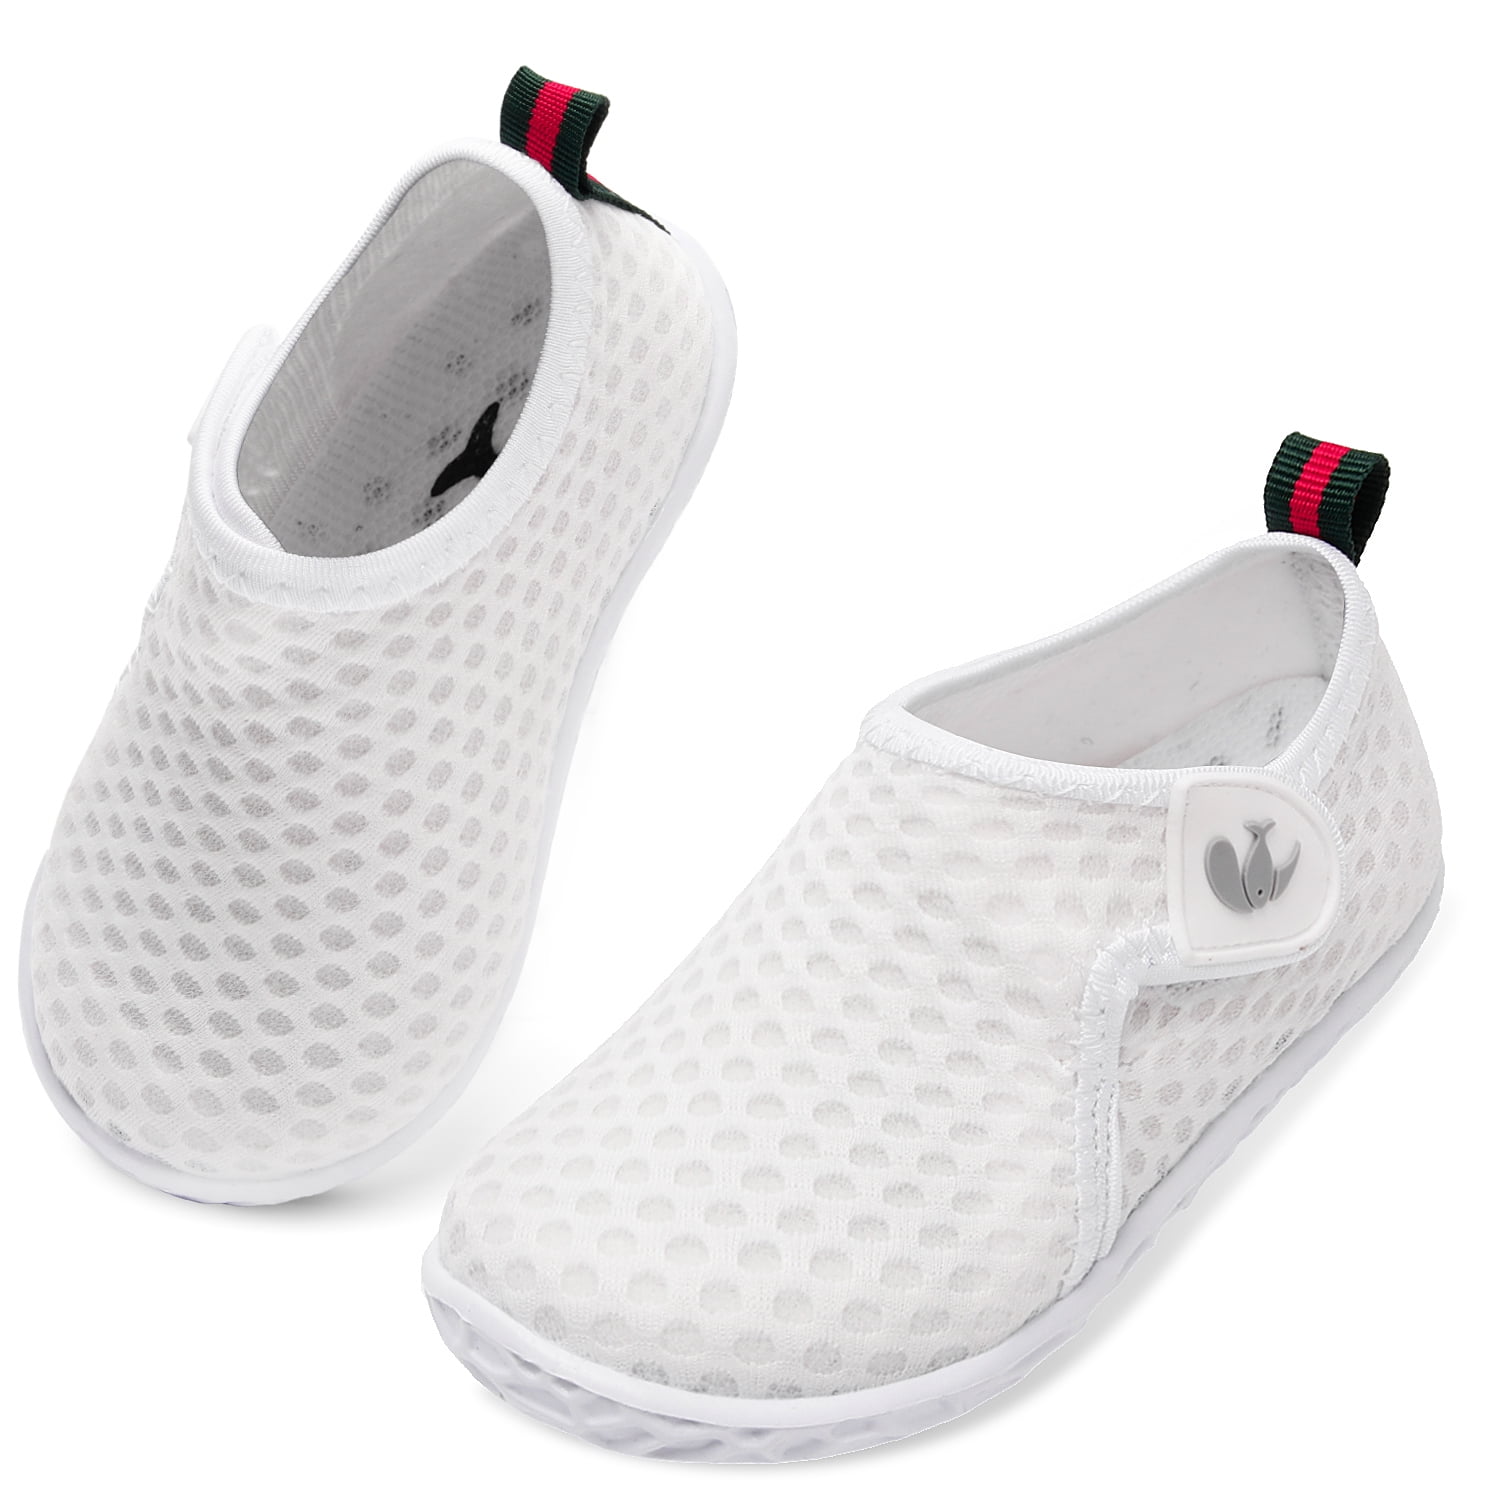 HOBIBEAR Boys Girls Quick Dry Water Shoes Lightweight Slip-on Sneakers for Beach Swiming Running